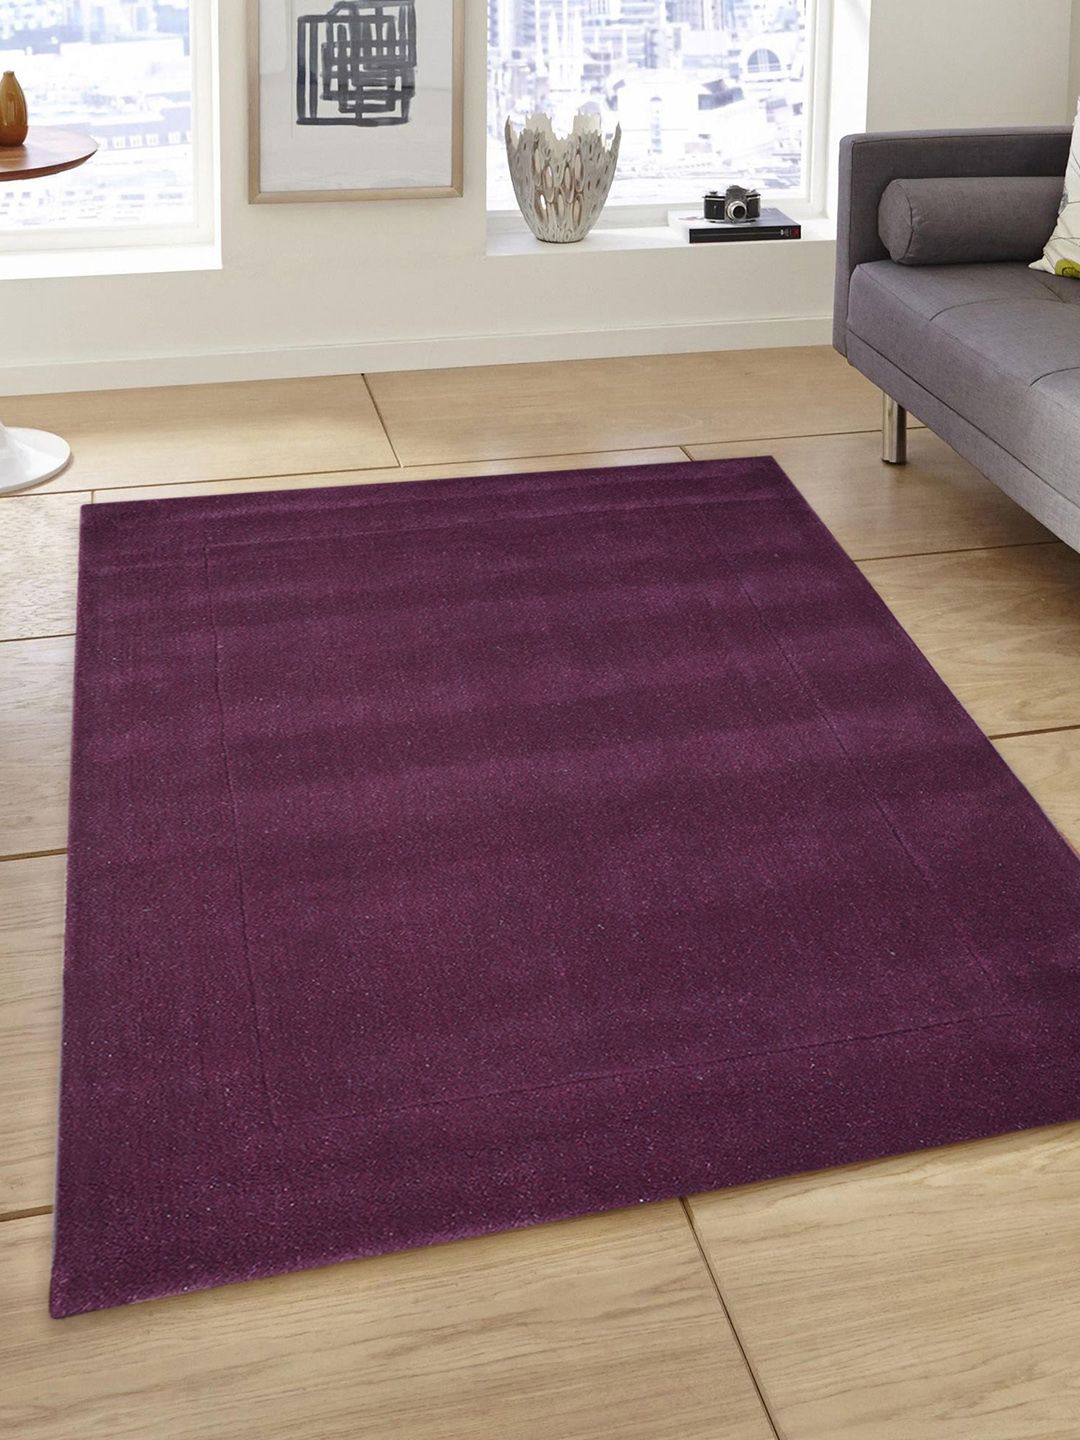 PRESTO Purple Solid Hand-Tufted Anti-Skid Woolen Carpet Price in India